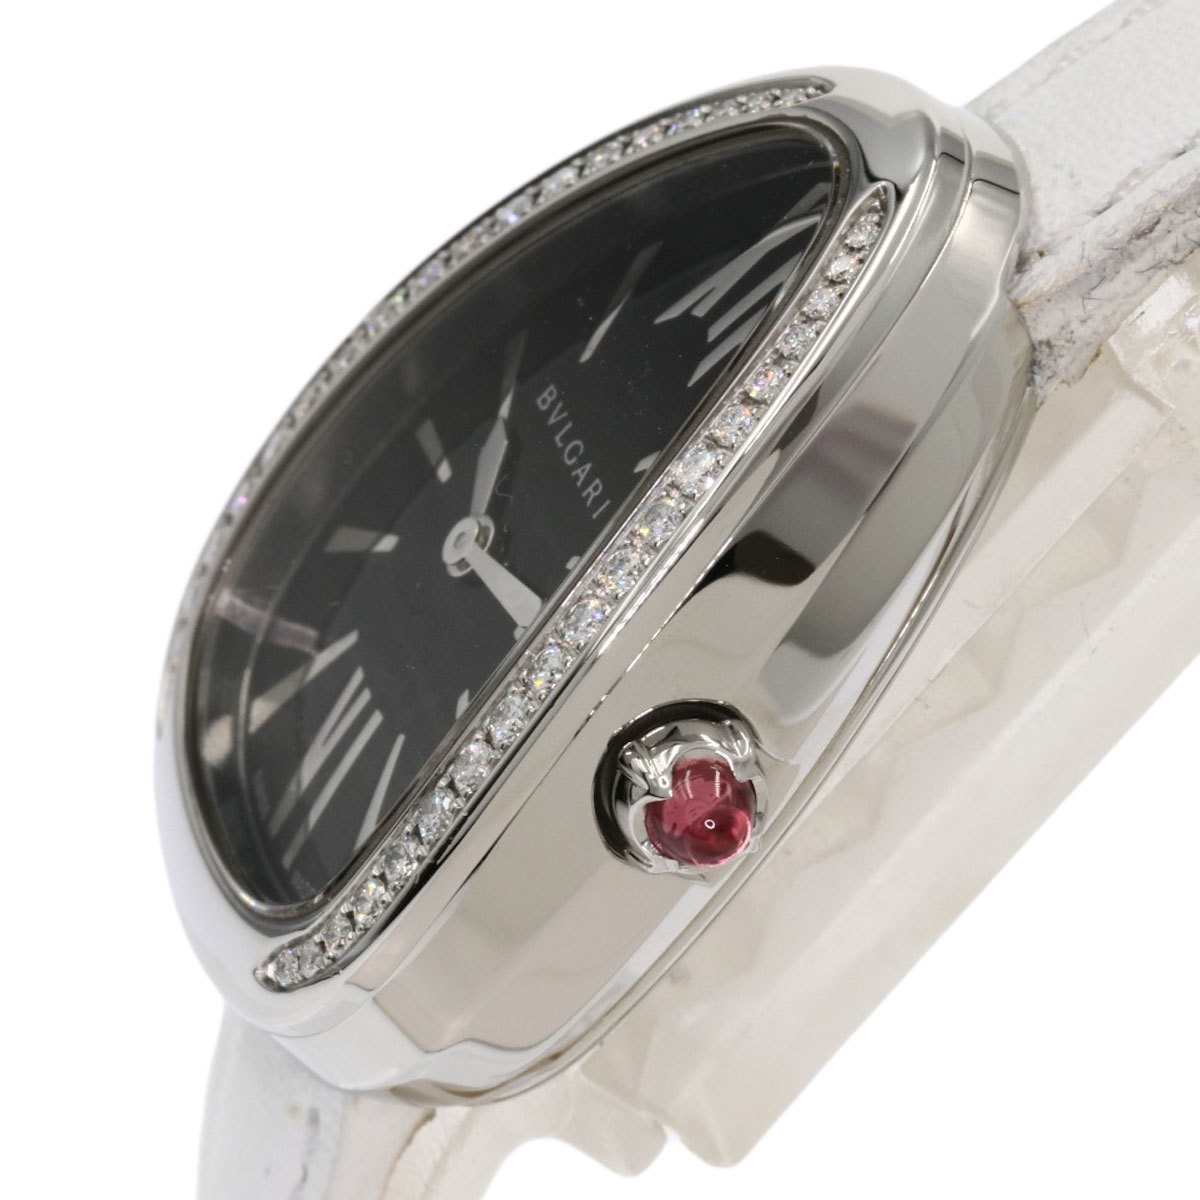 BVLGARI ブルガリ SP32BSDL セルペンティ ベゼルダイヤモンド 腕時計 ステンレススチール 革 ダイヤモンド レディース 中古_画像5